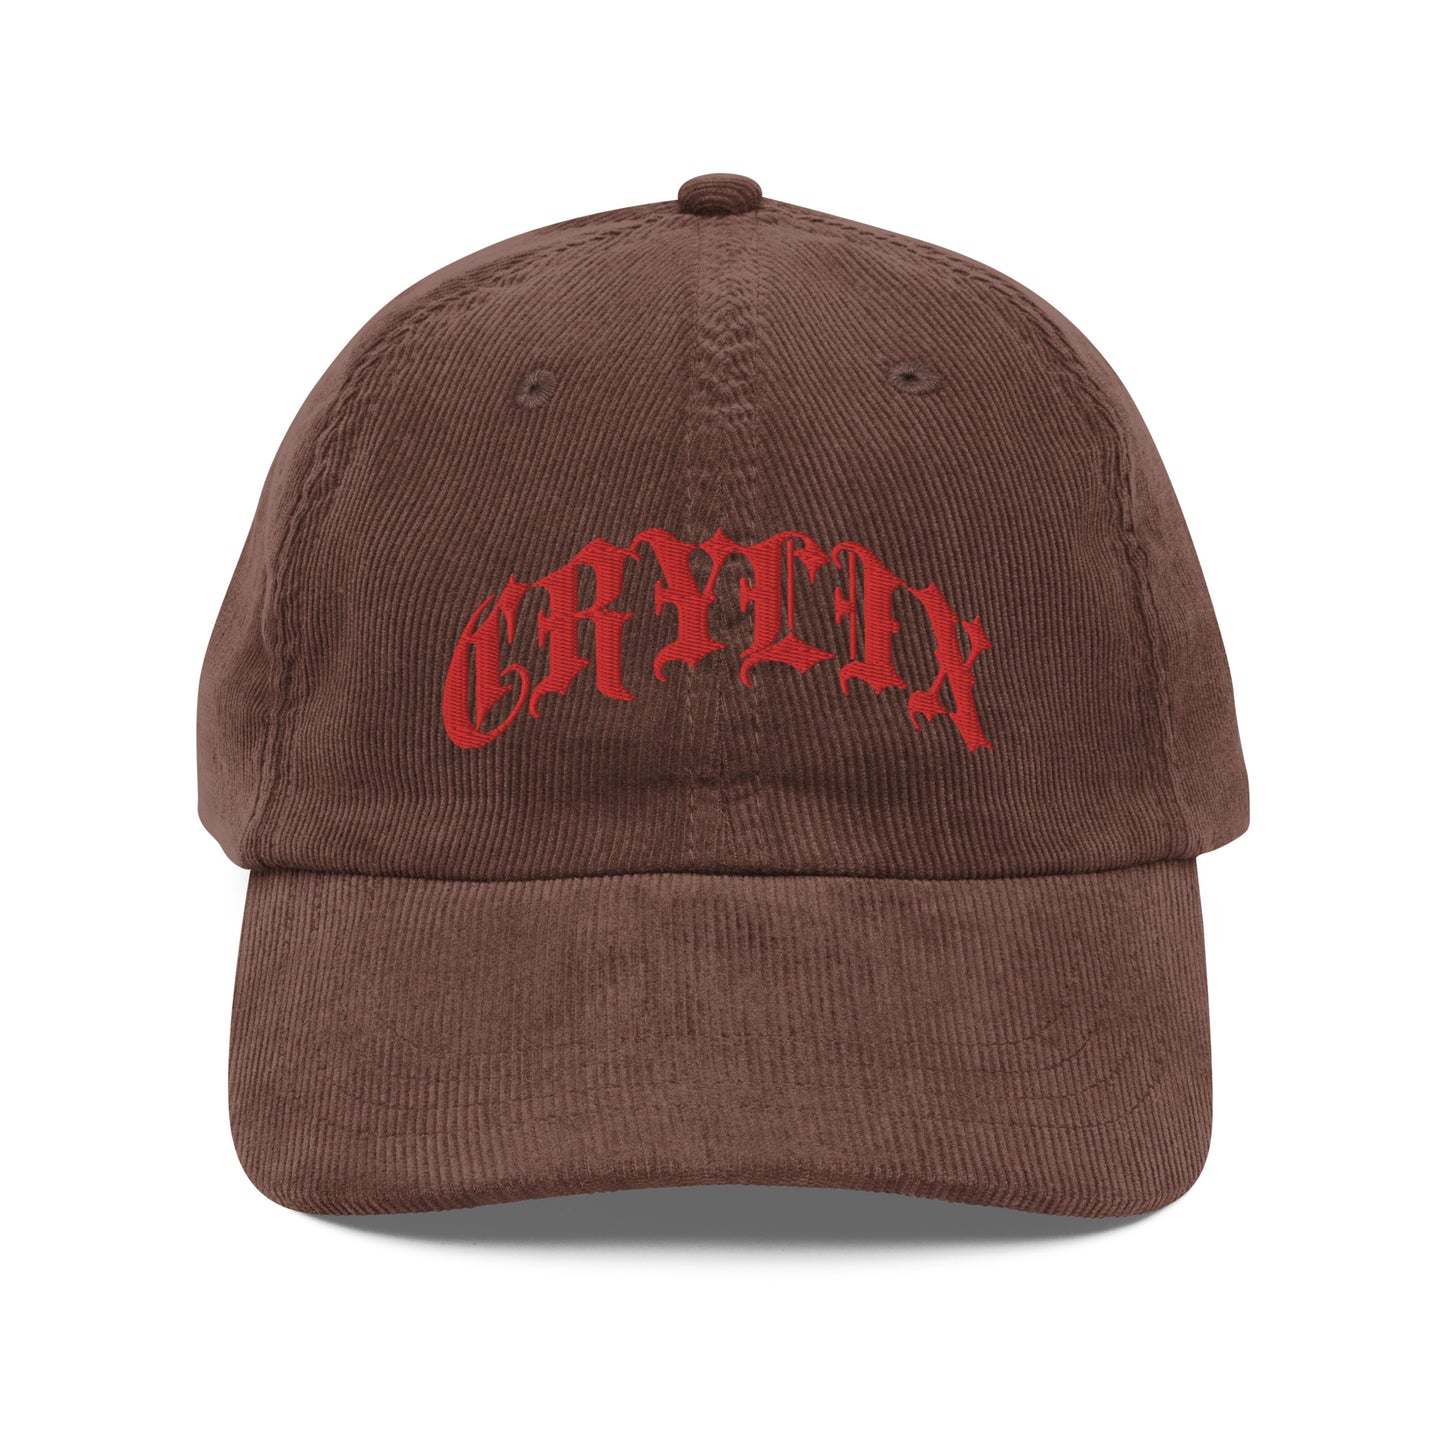 Crylix Vintage corduroy cap